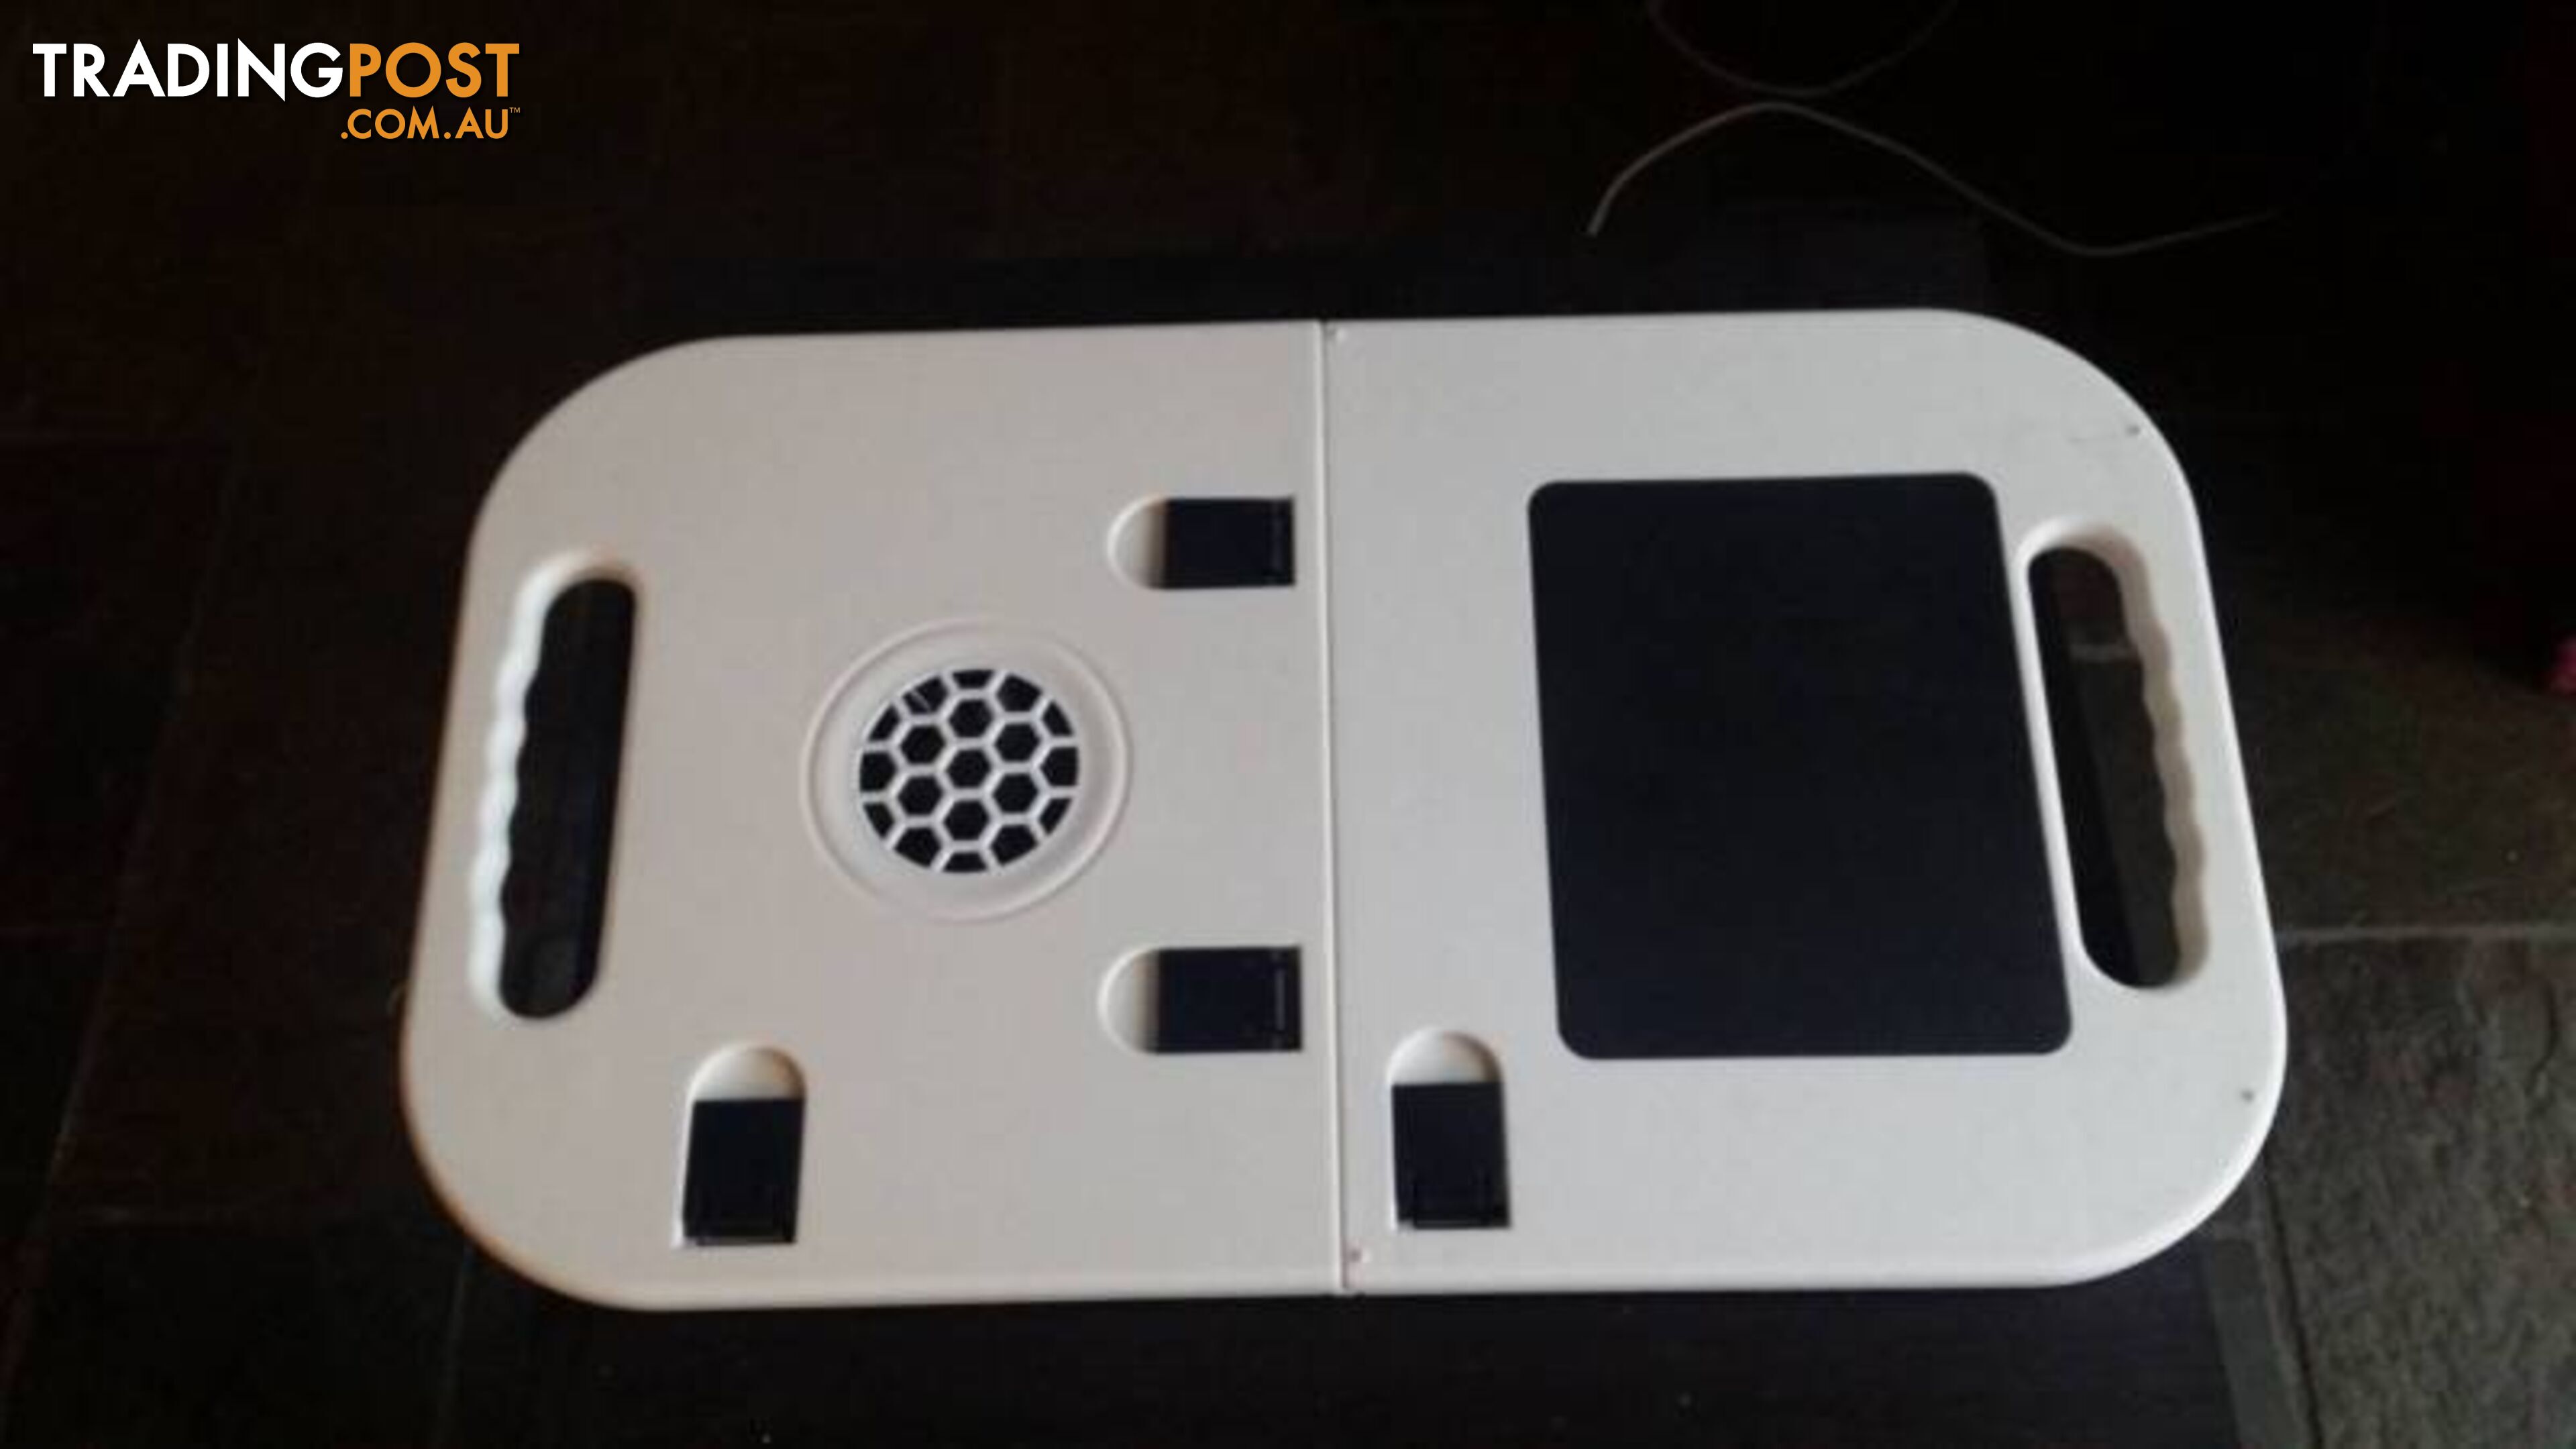 Adjustable Tablet Stand - With inbuilt USB Fan!! - BRAND NEW